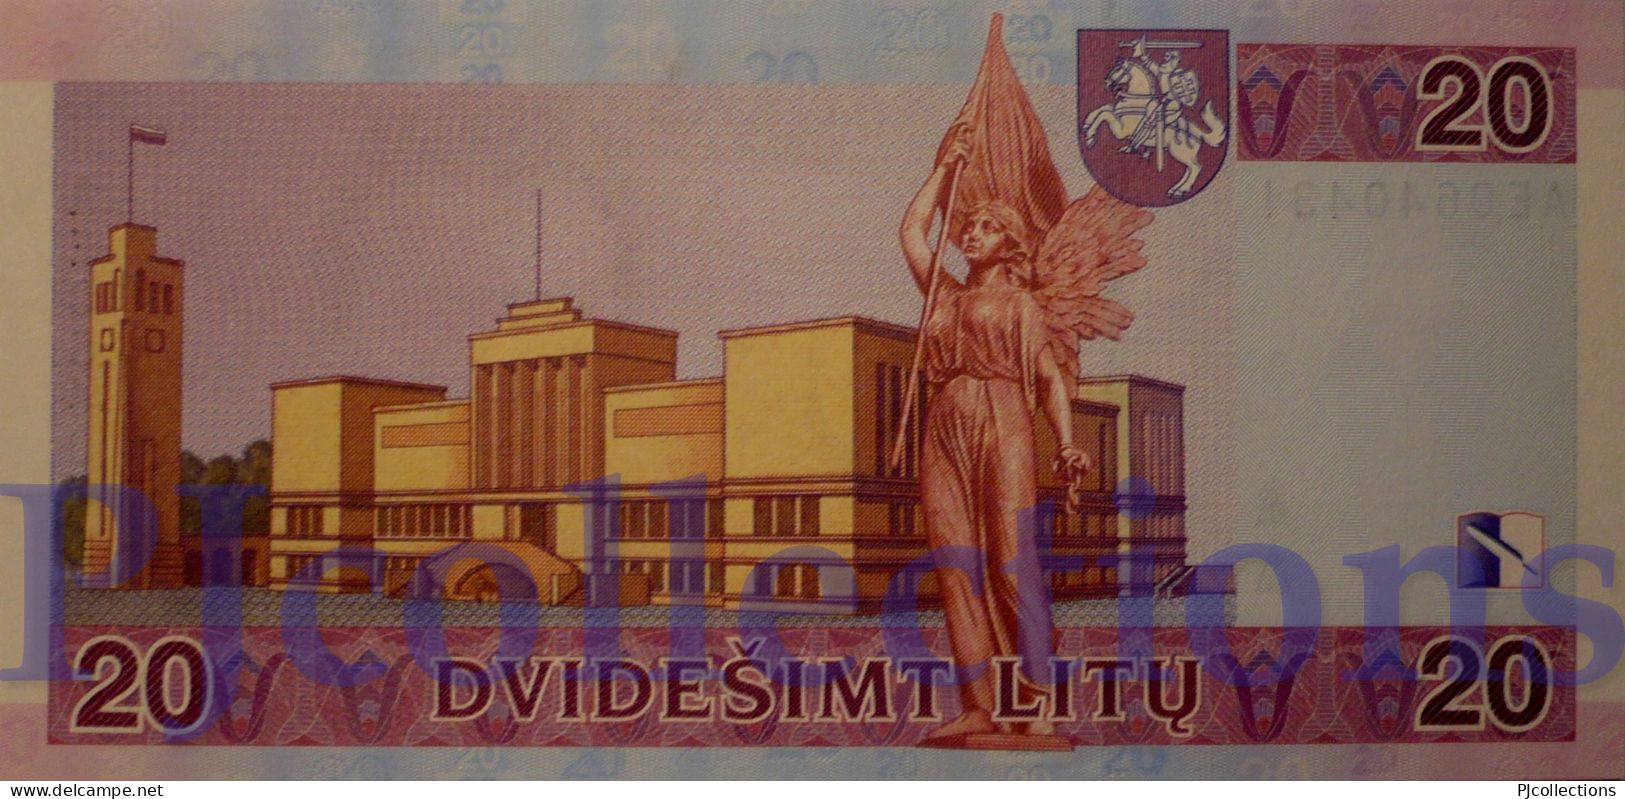 LITHUANIA 20 LITU 2001 PICK 66 UNC - Lituania